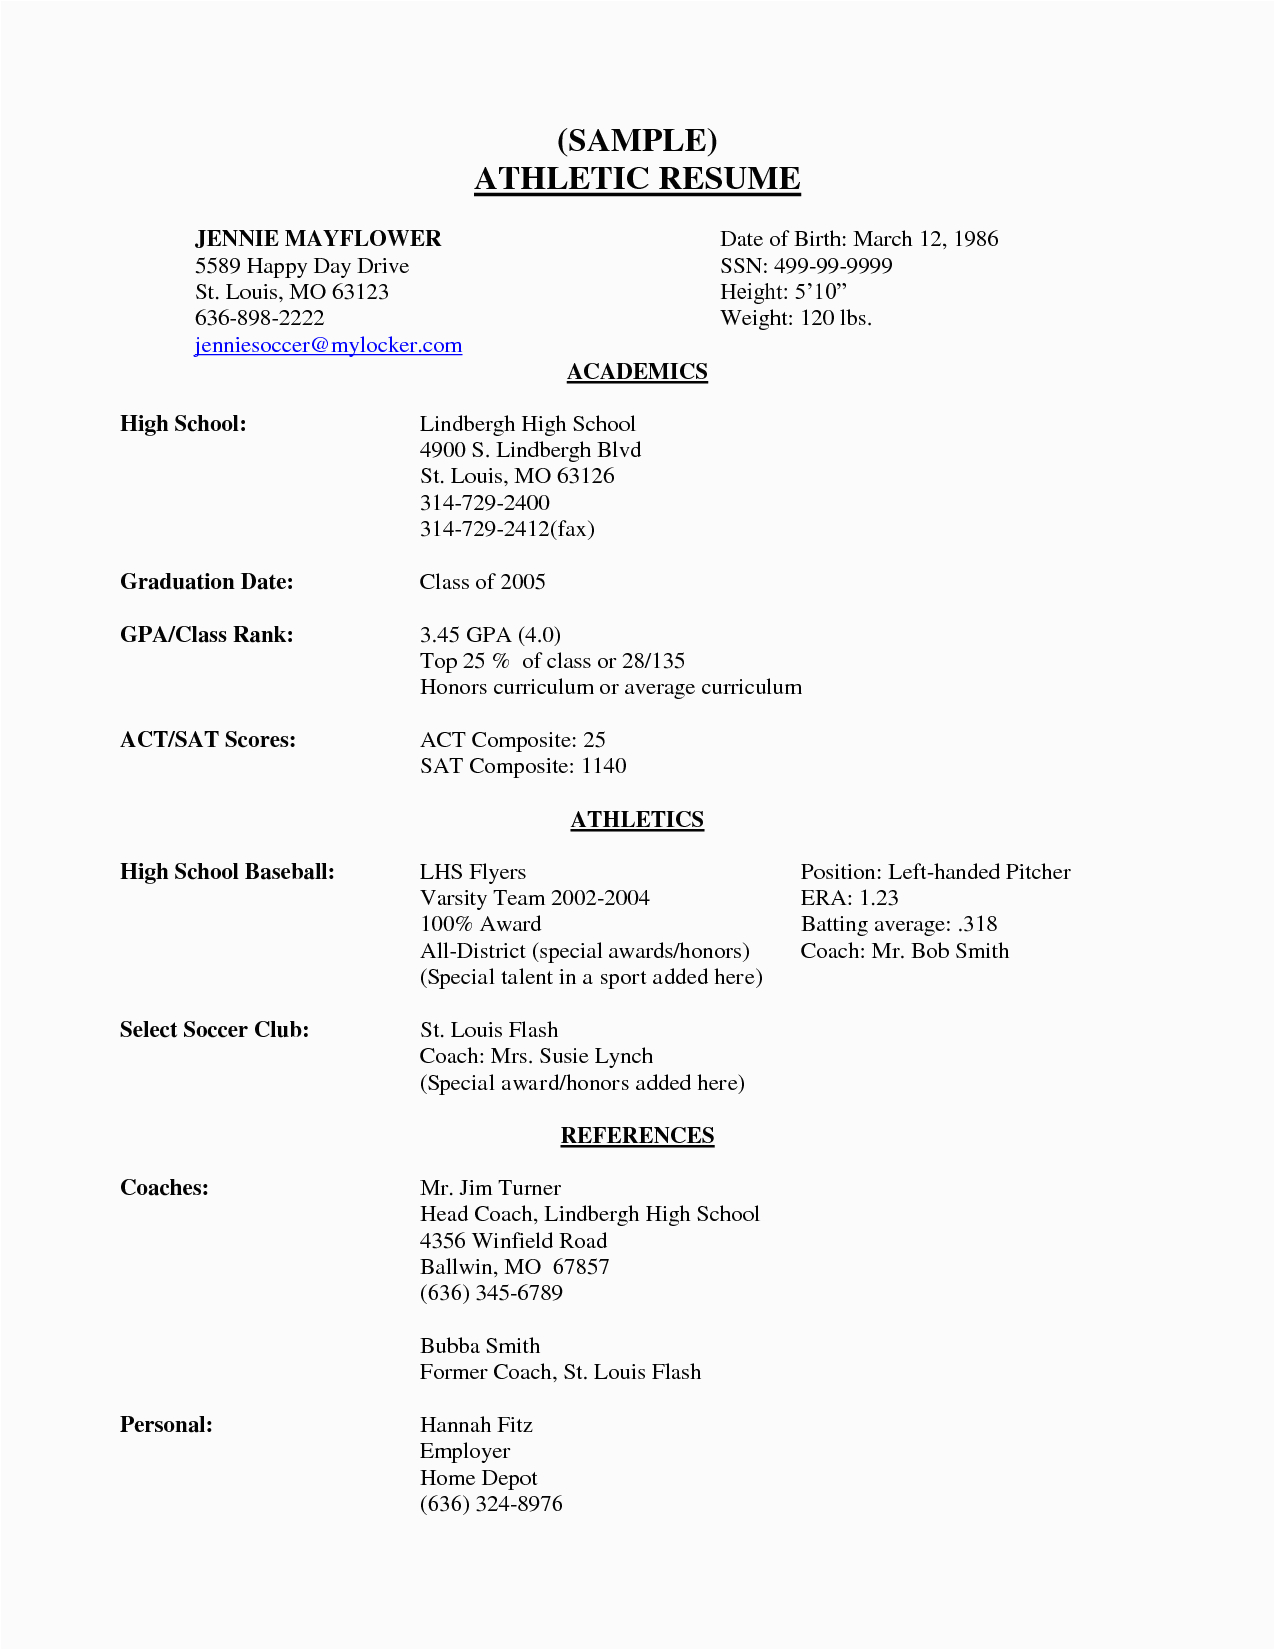 High School Senior College Resume Sample Sample athletic Resume